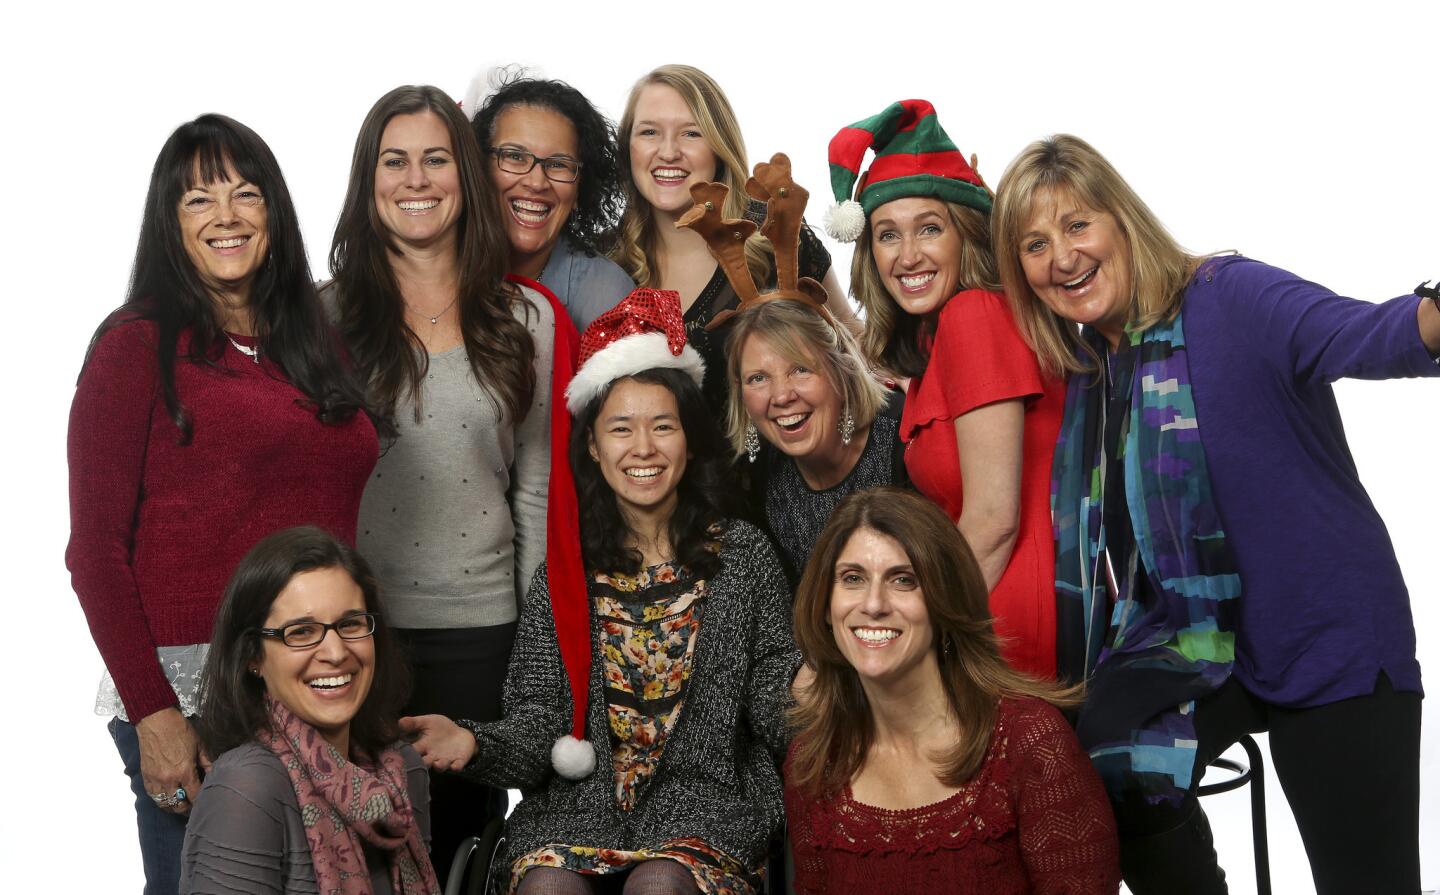 2014 holiday cookie finalists, front row from left, Liz Boerkoel, Sarah Mahoney, Karen Florek and Gail Field; back row, Elizabeth Morner, Alison Young, Sharon Graves, Lauren Bajorinas, Bradie Fink and Jan Lansing.